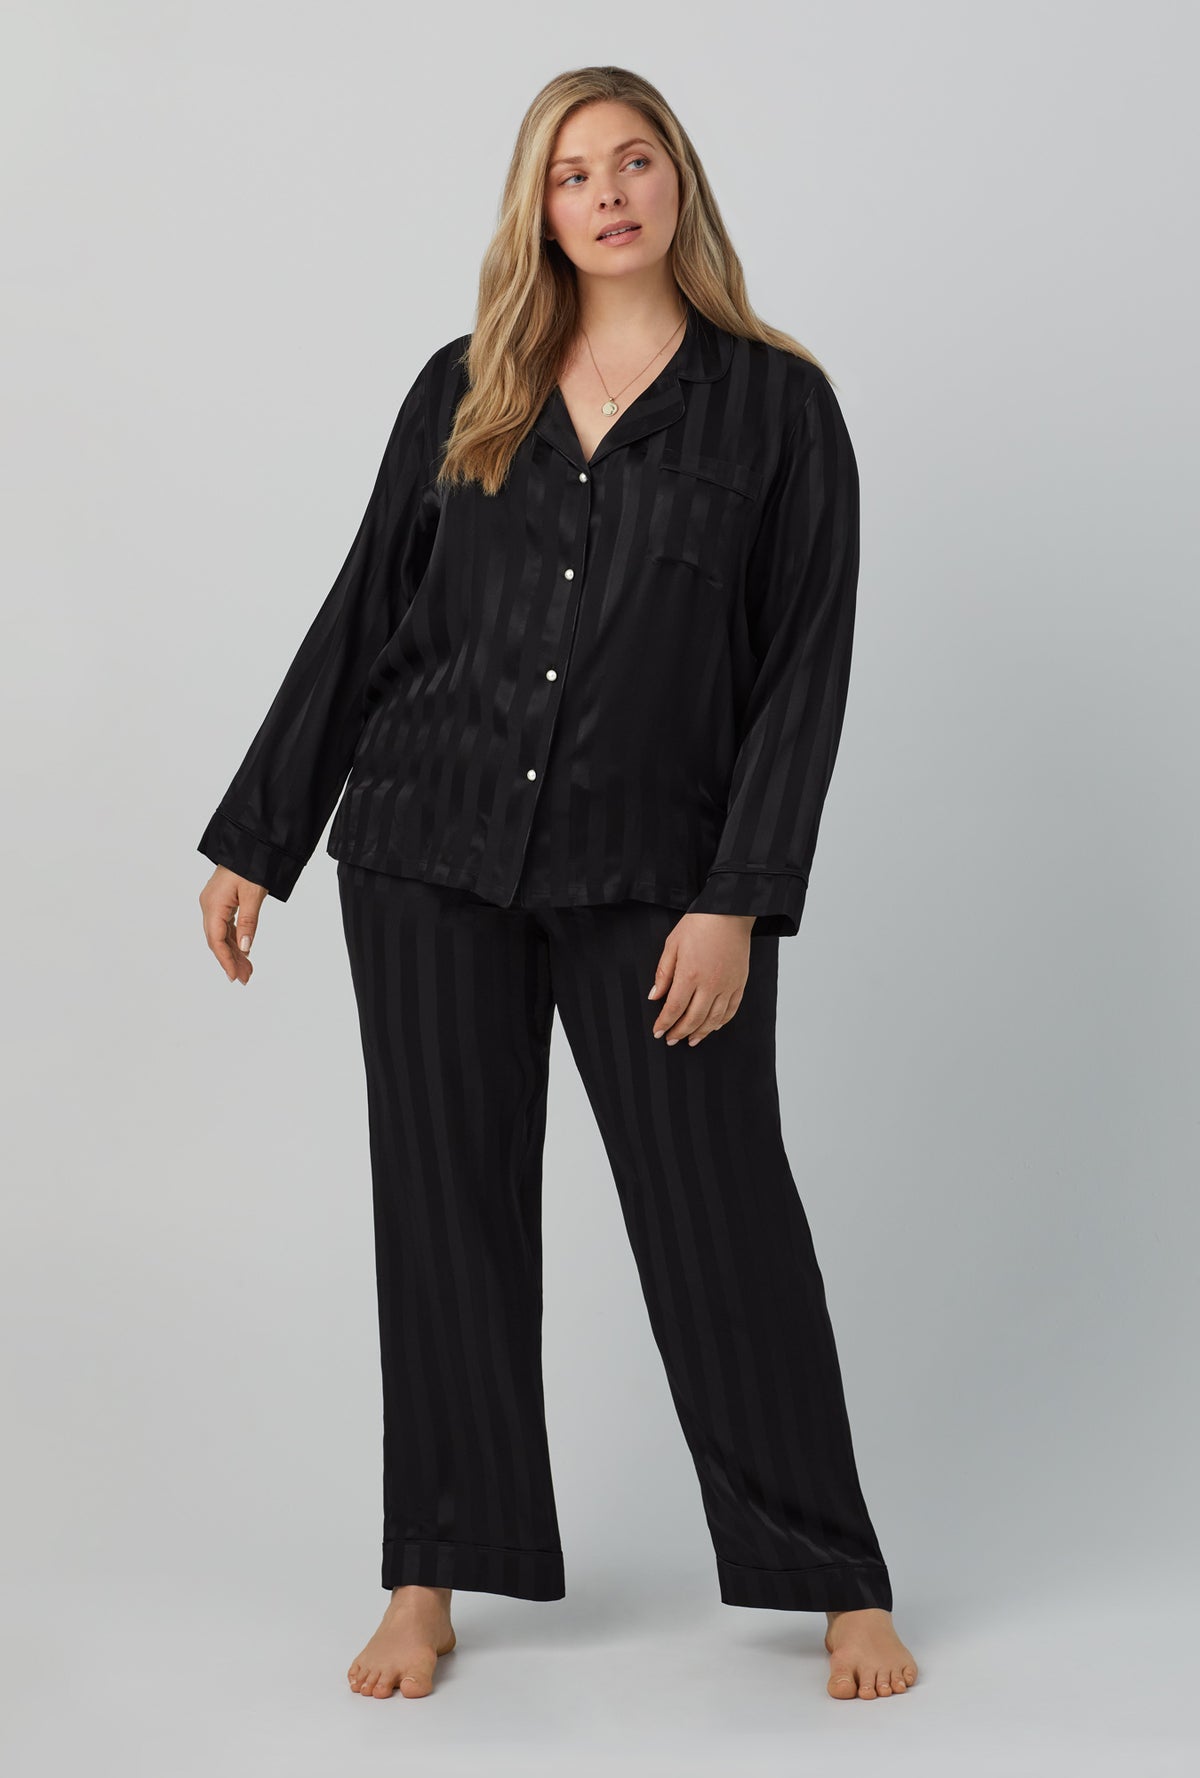 A lady wearing black  Long Sleeve Classic Washable Silk Satin PJ Set with Onyx print